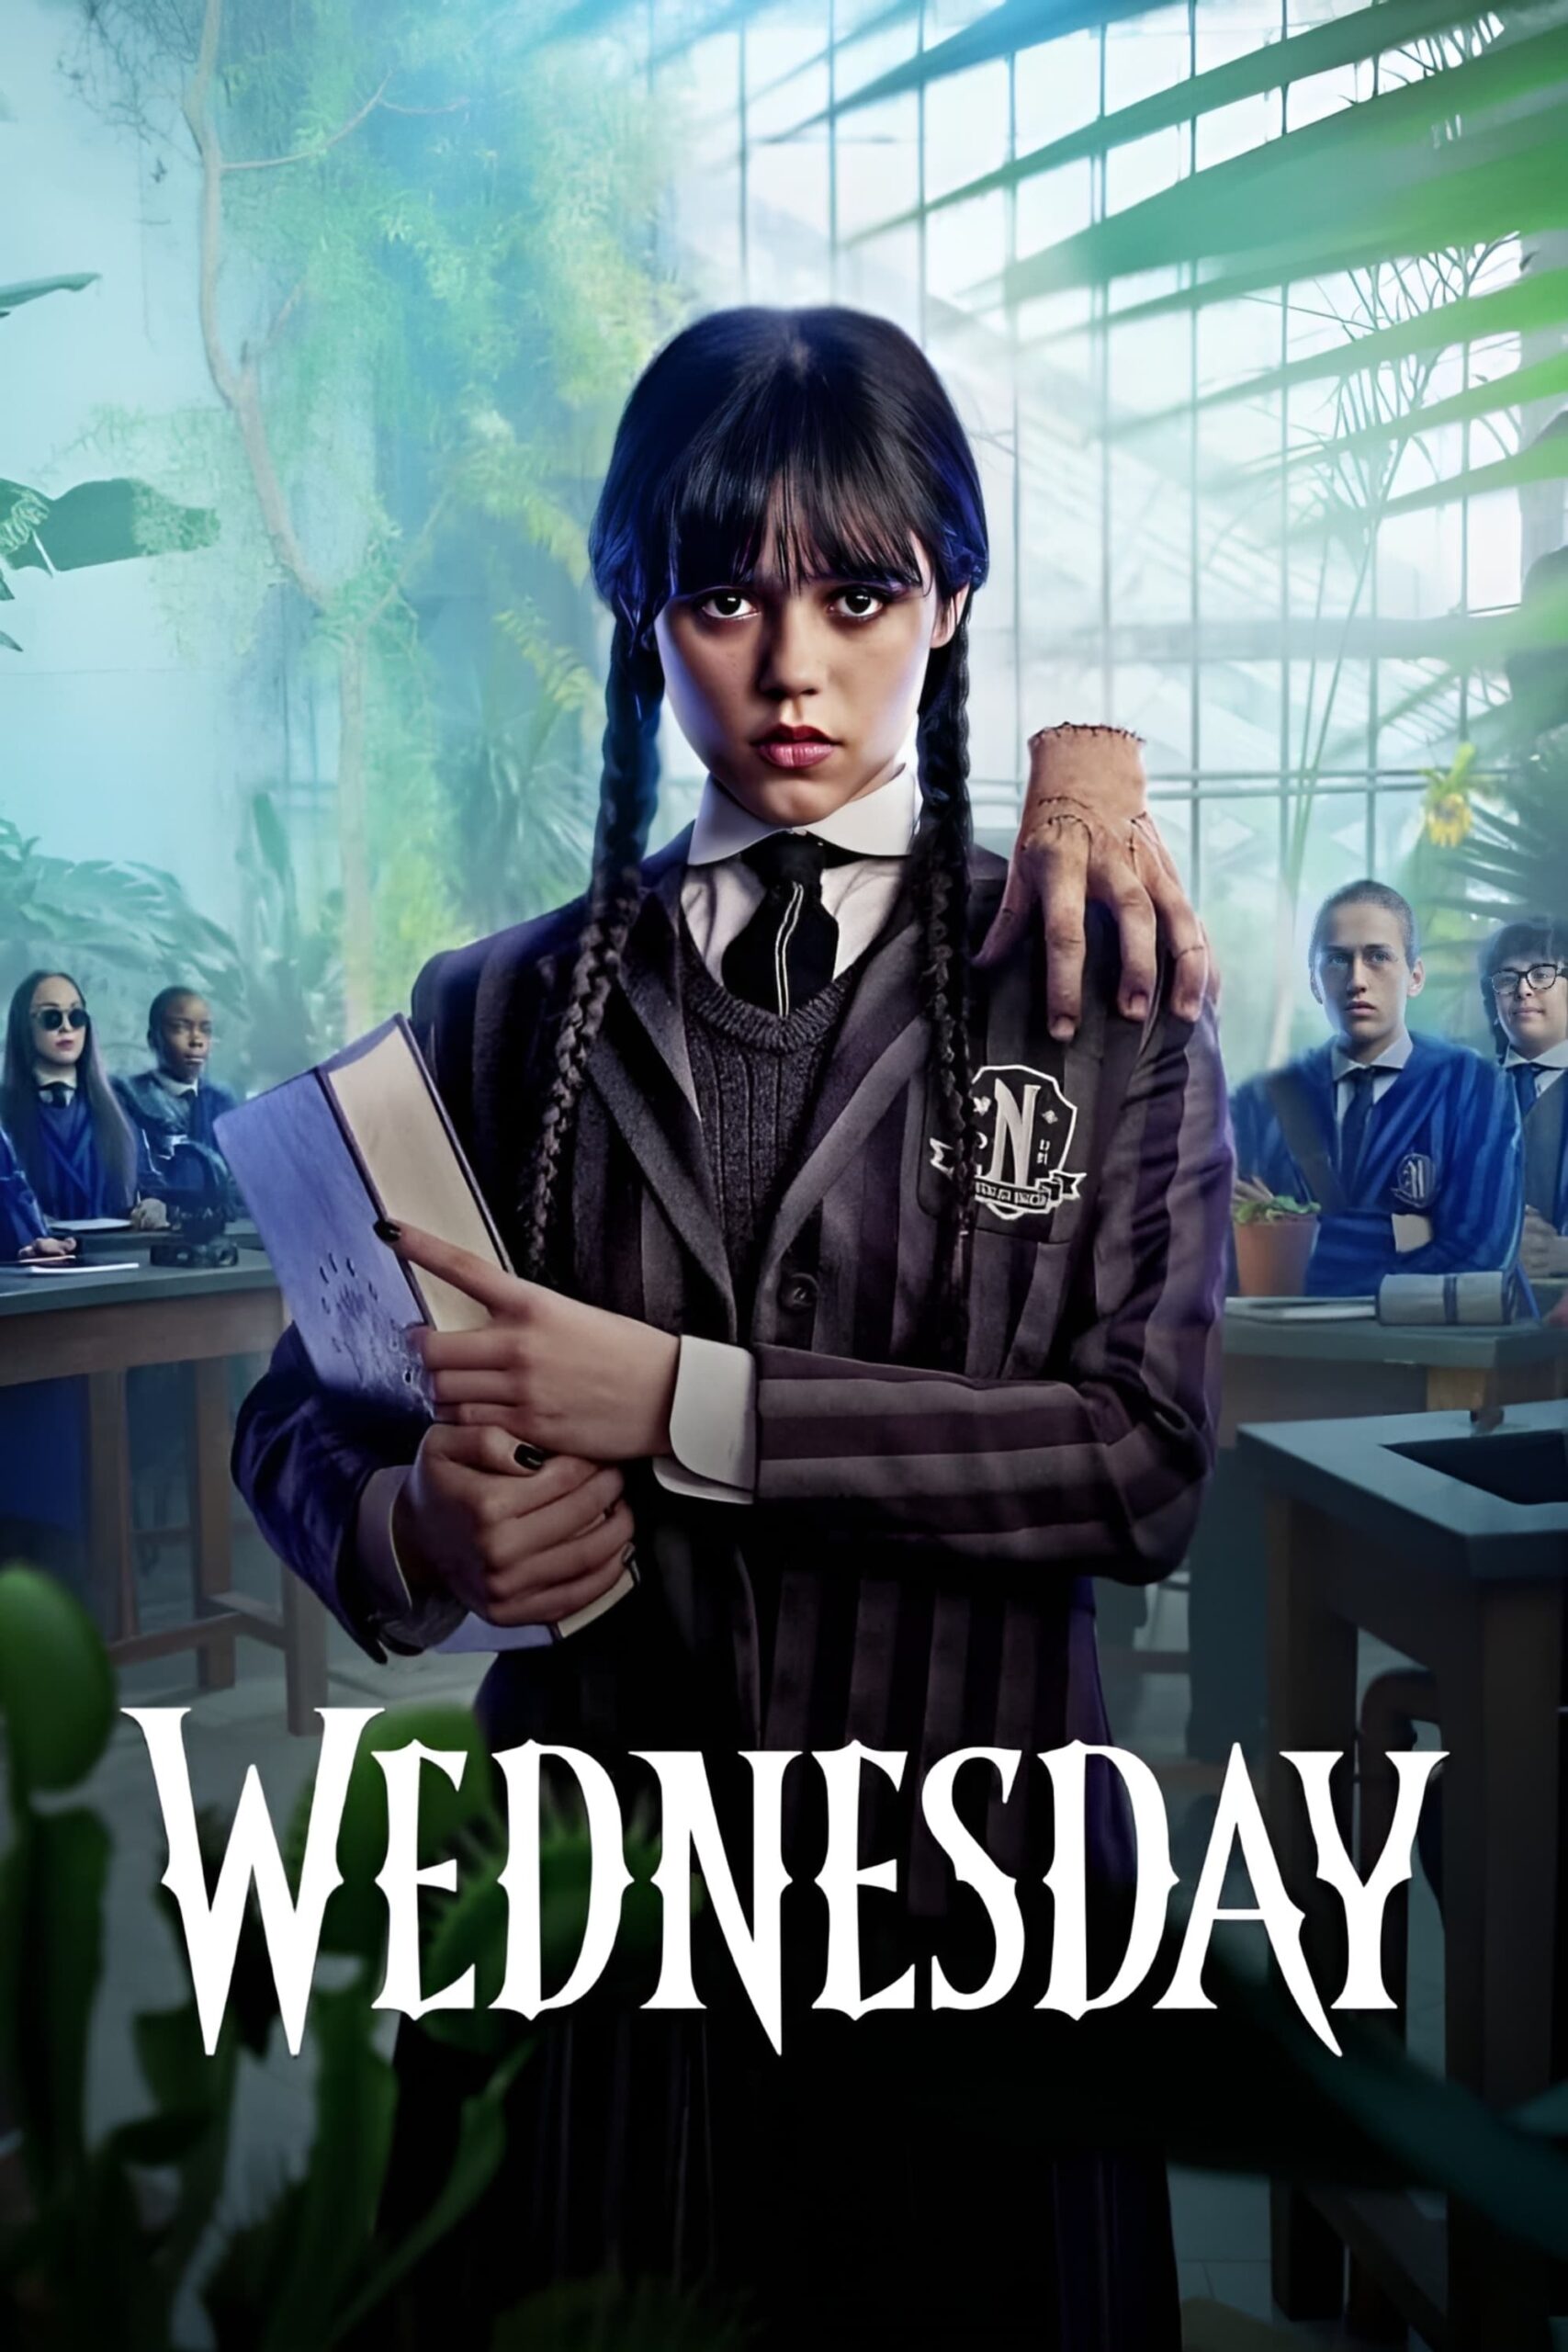 Plakát pro film “Wednesday”